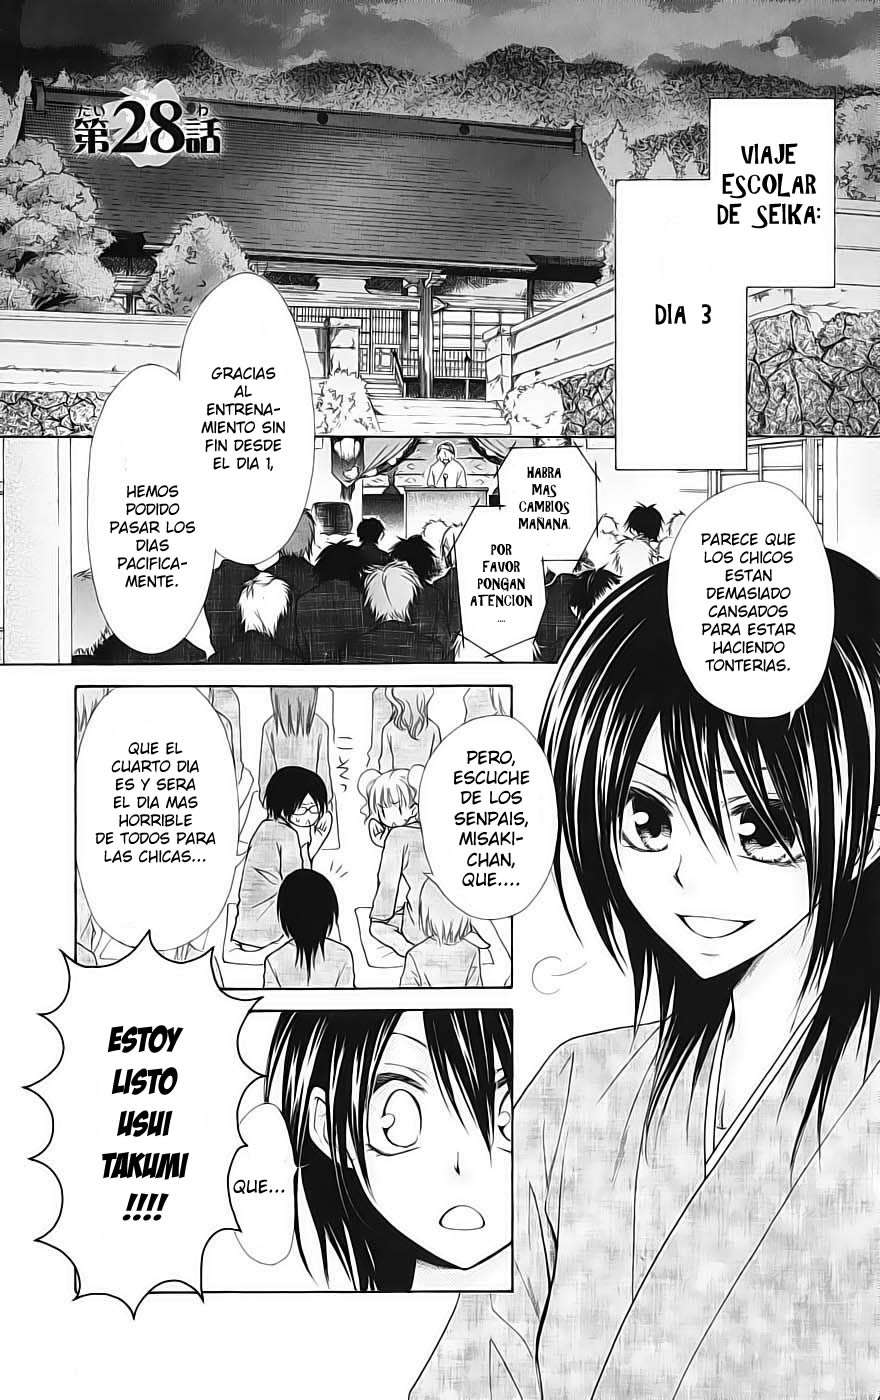 Manga Kaichou wa Maid-sama! 28 Online - InManga